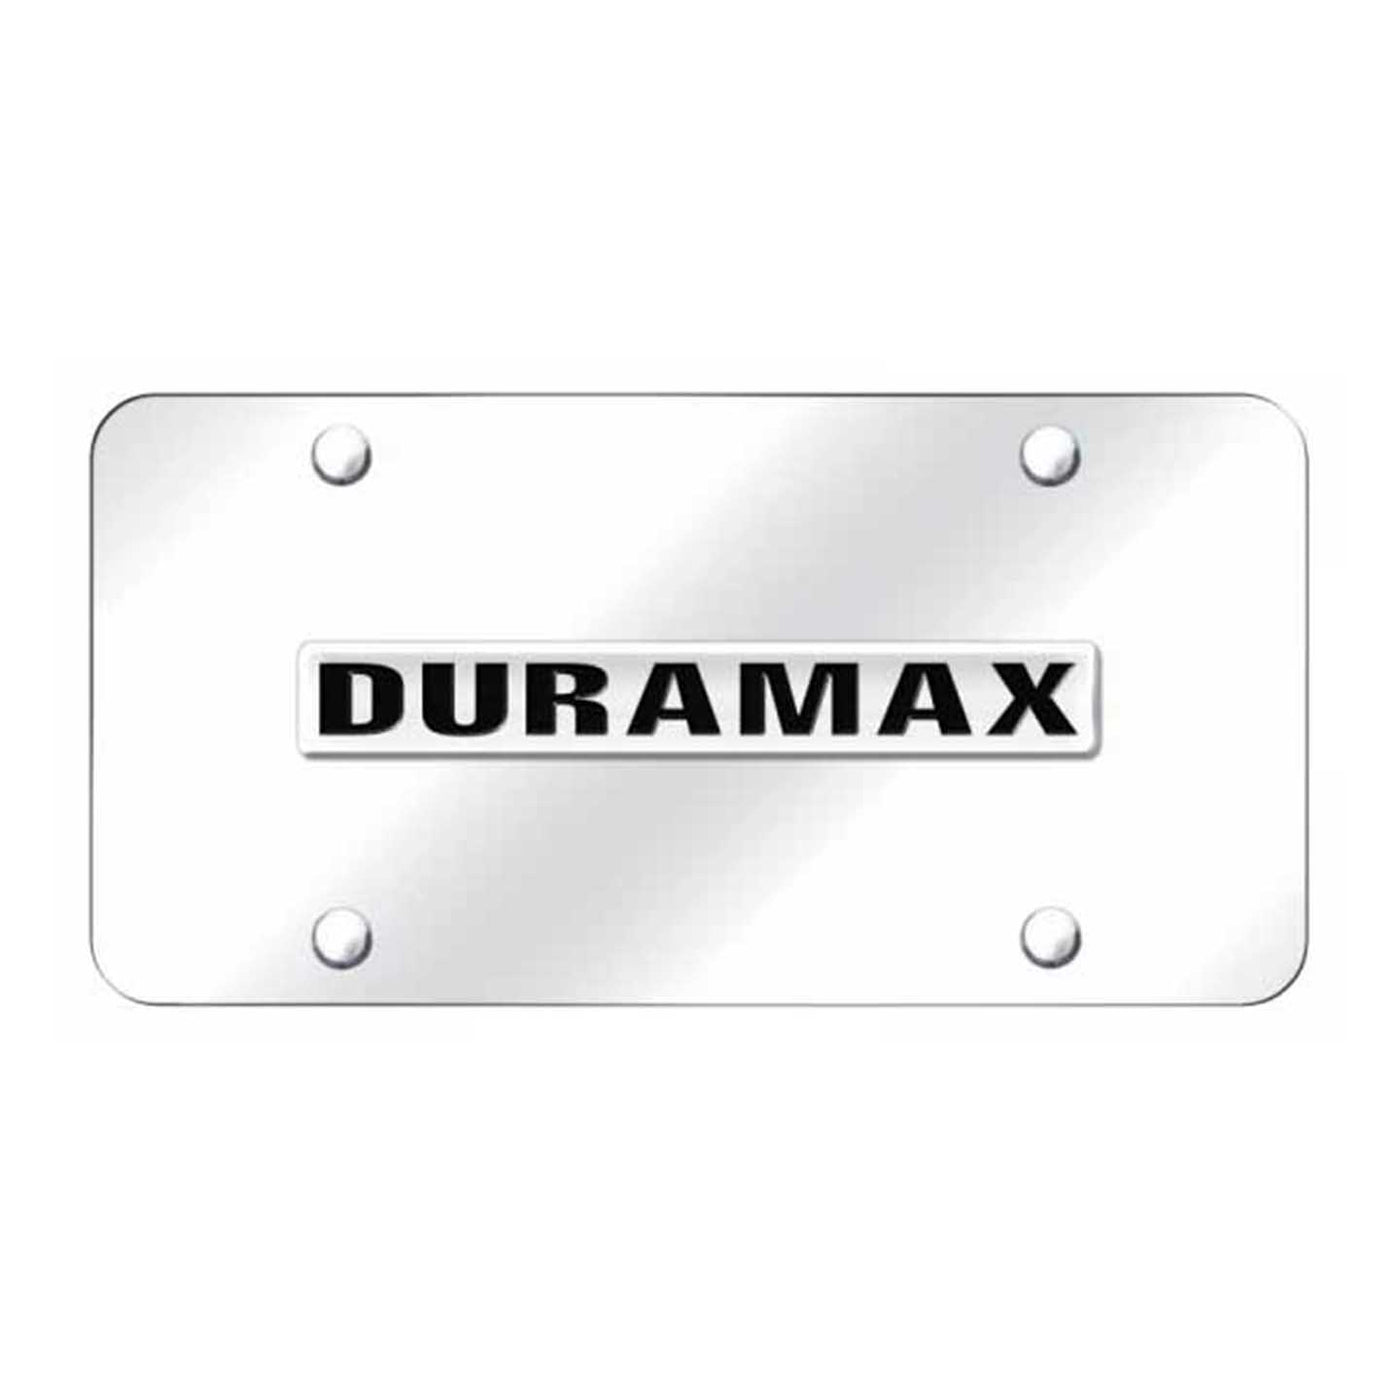 Duramax Name License Plate - Chrome on Mirrored